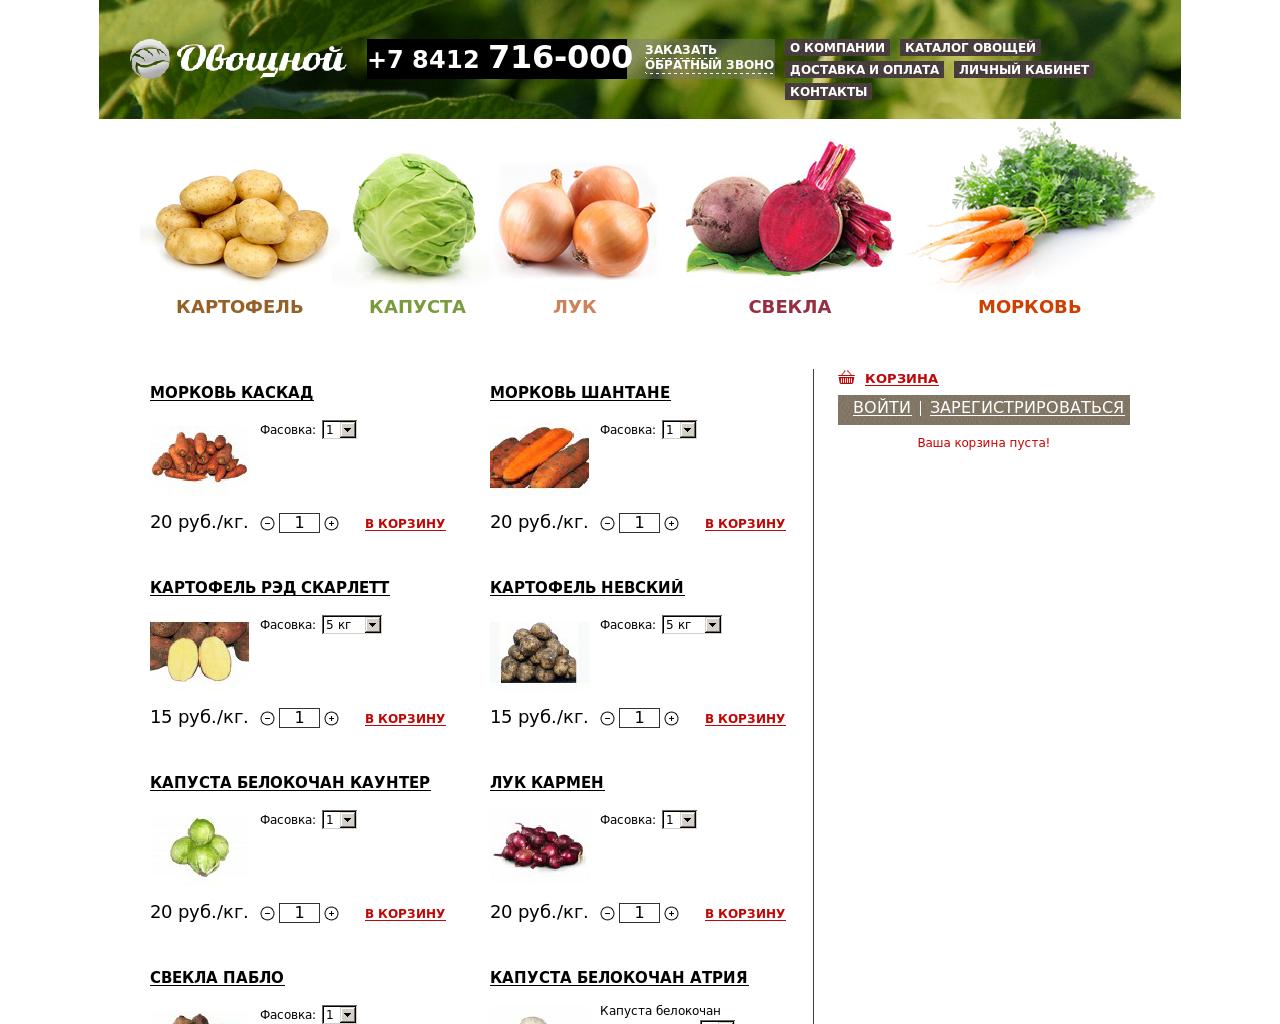 Изображение сайта пенза-овощи.рф в разрешении 1280x1024